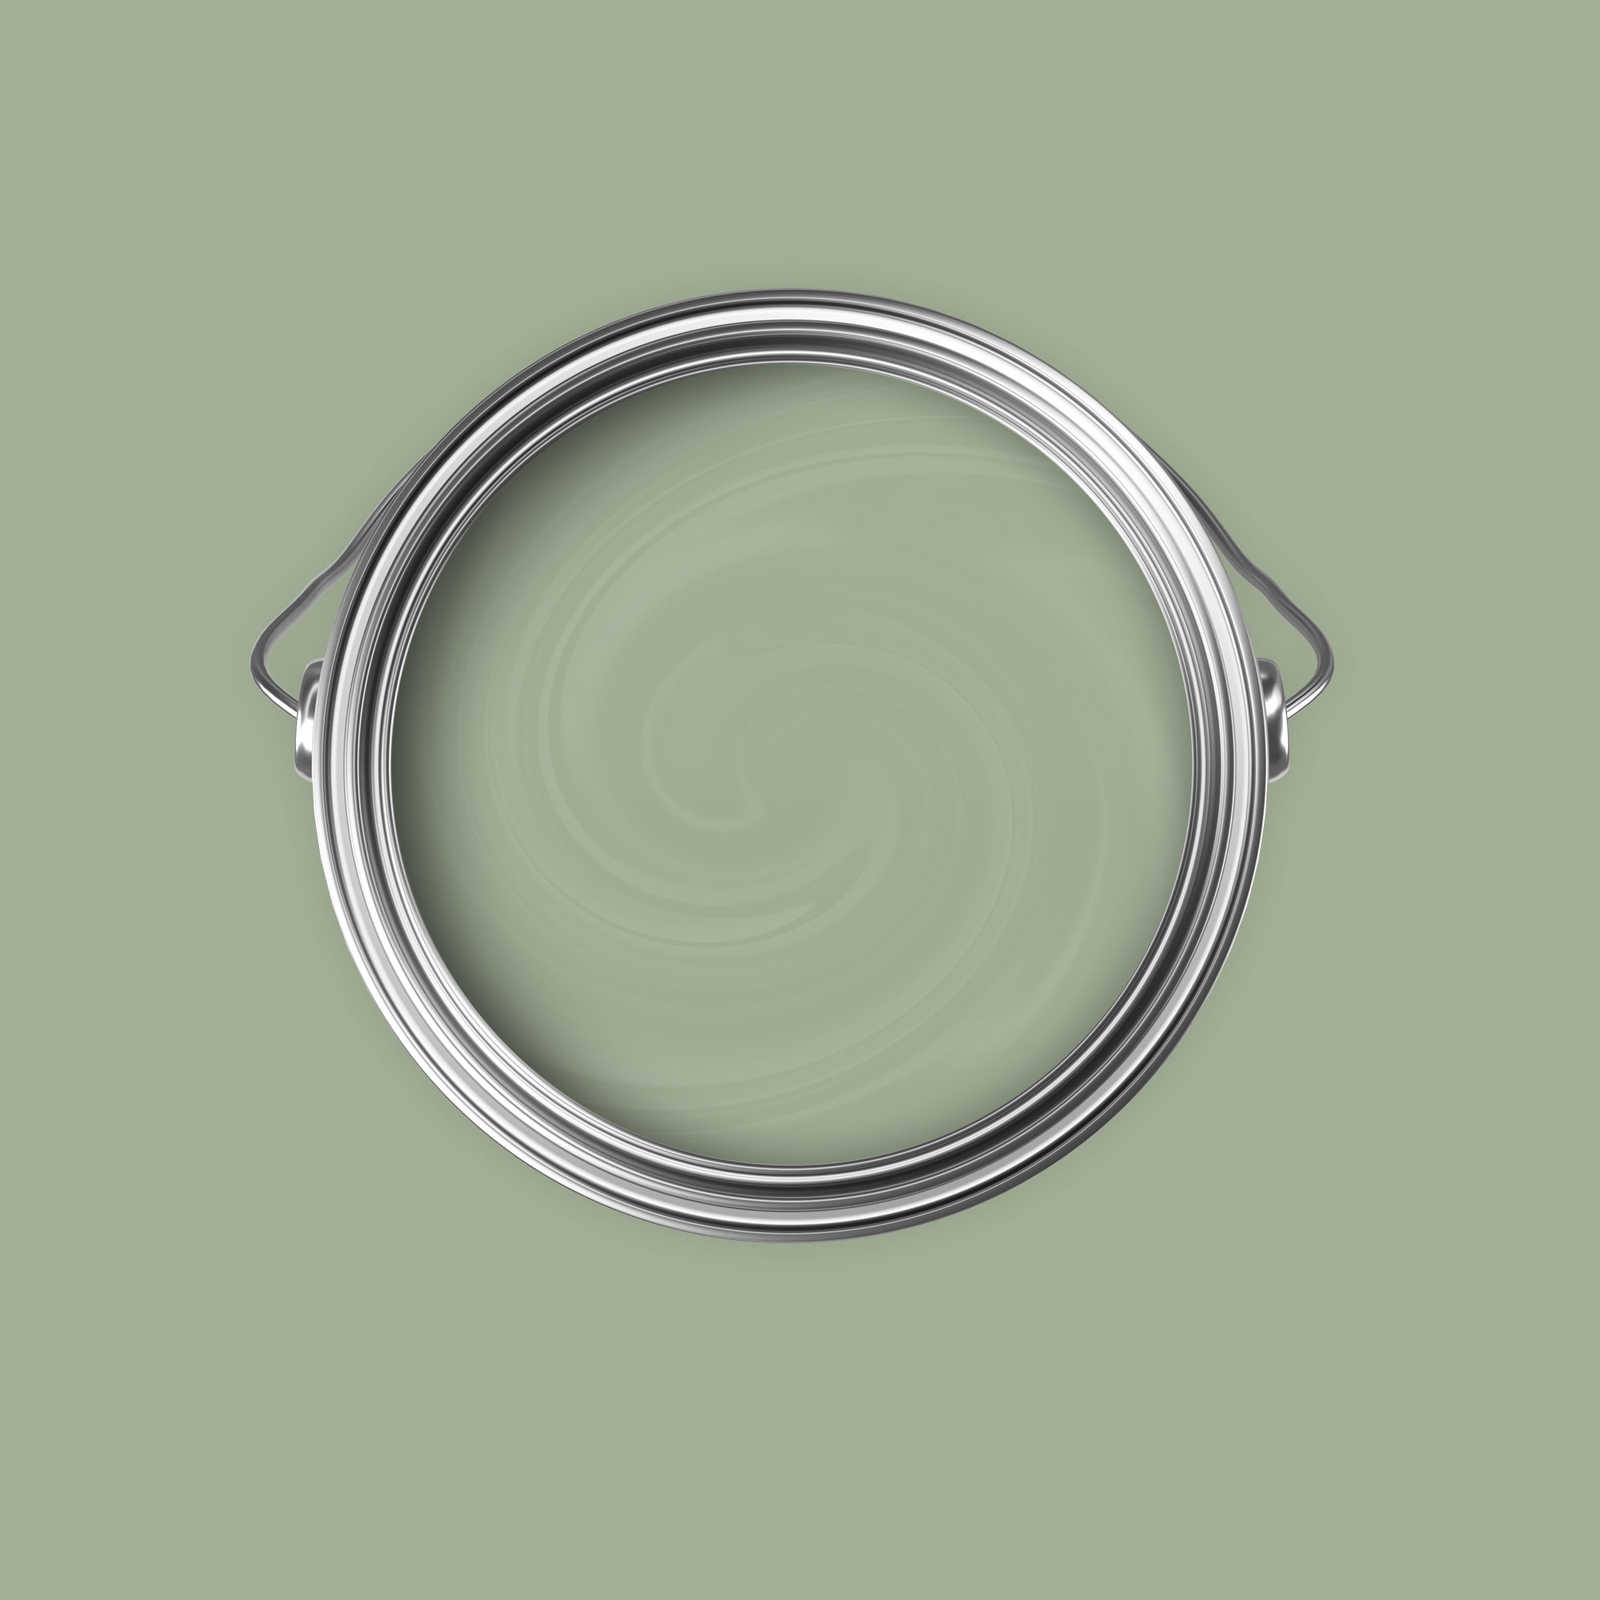             Peinture murale Premium vert olive terre »Gorgeous Green« NW502 – 5 litres
        